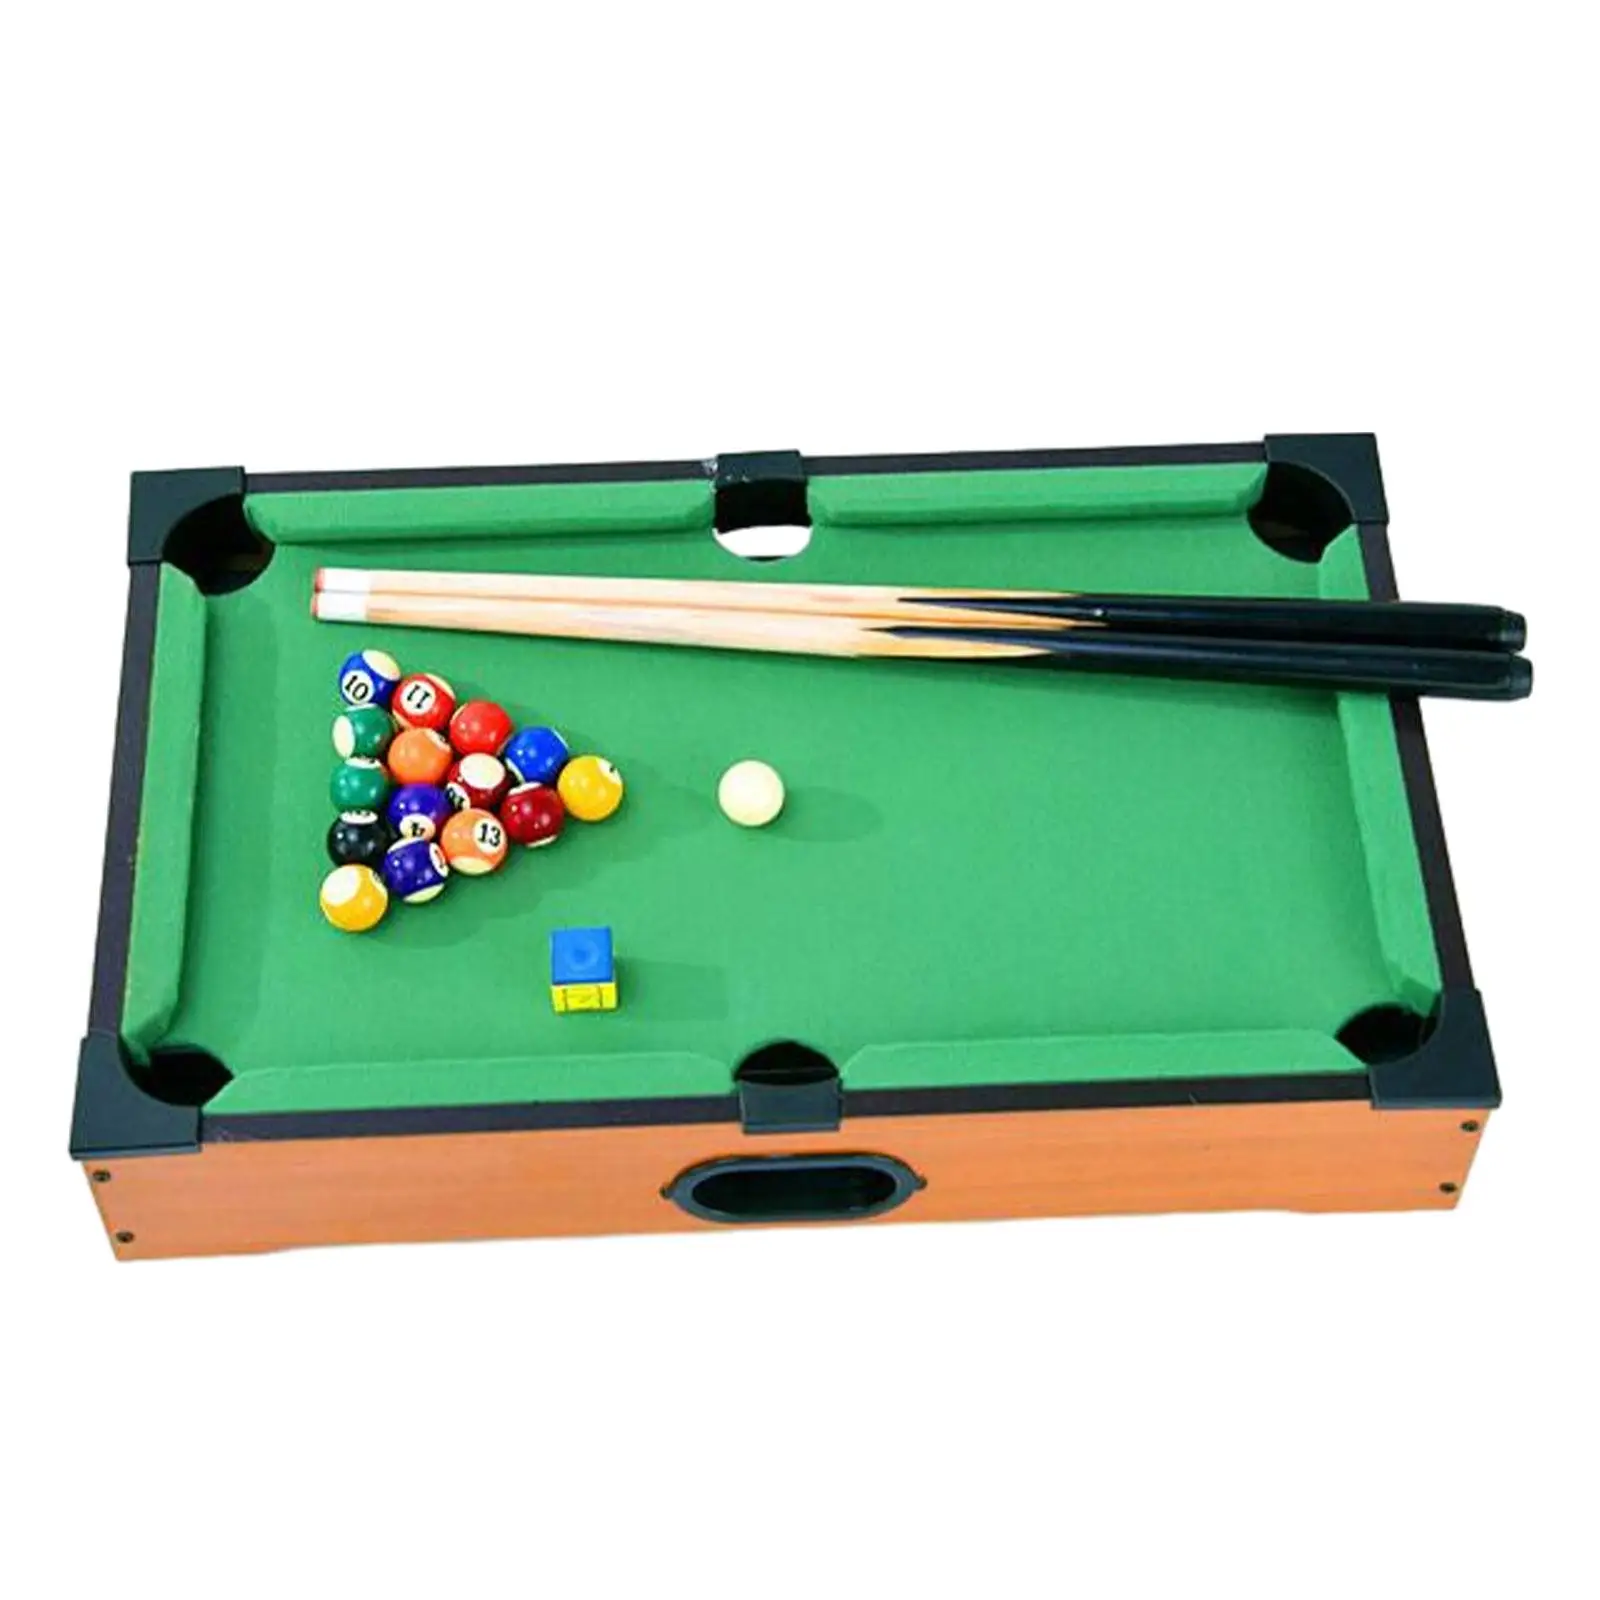 Mini Tabletop Pool Set Easy to Install Playset Motor Skills Billiards Toy Wood for Indoor Playroom Desk Living Room Game Room